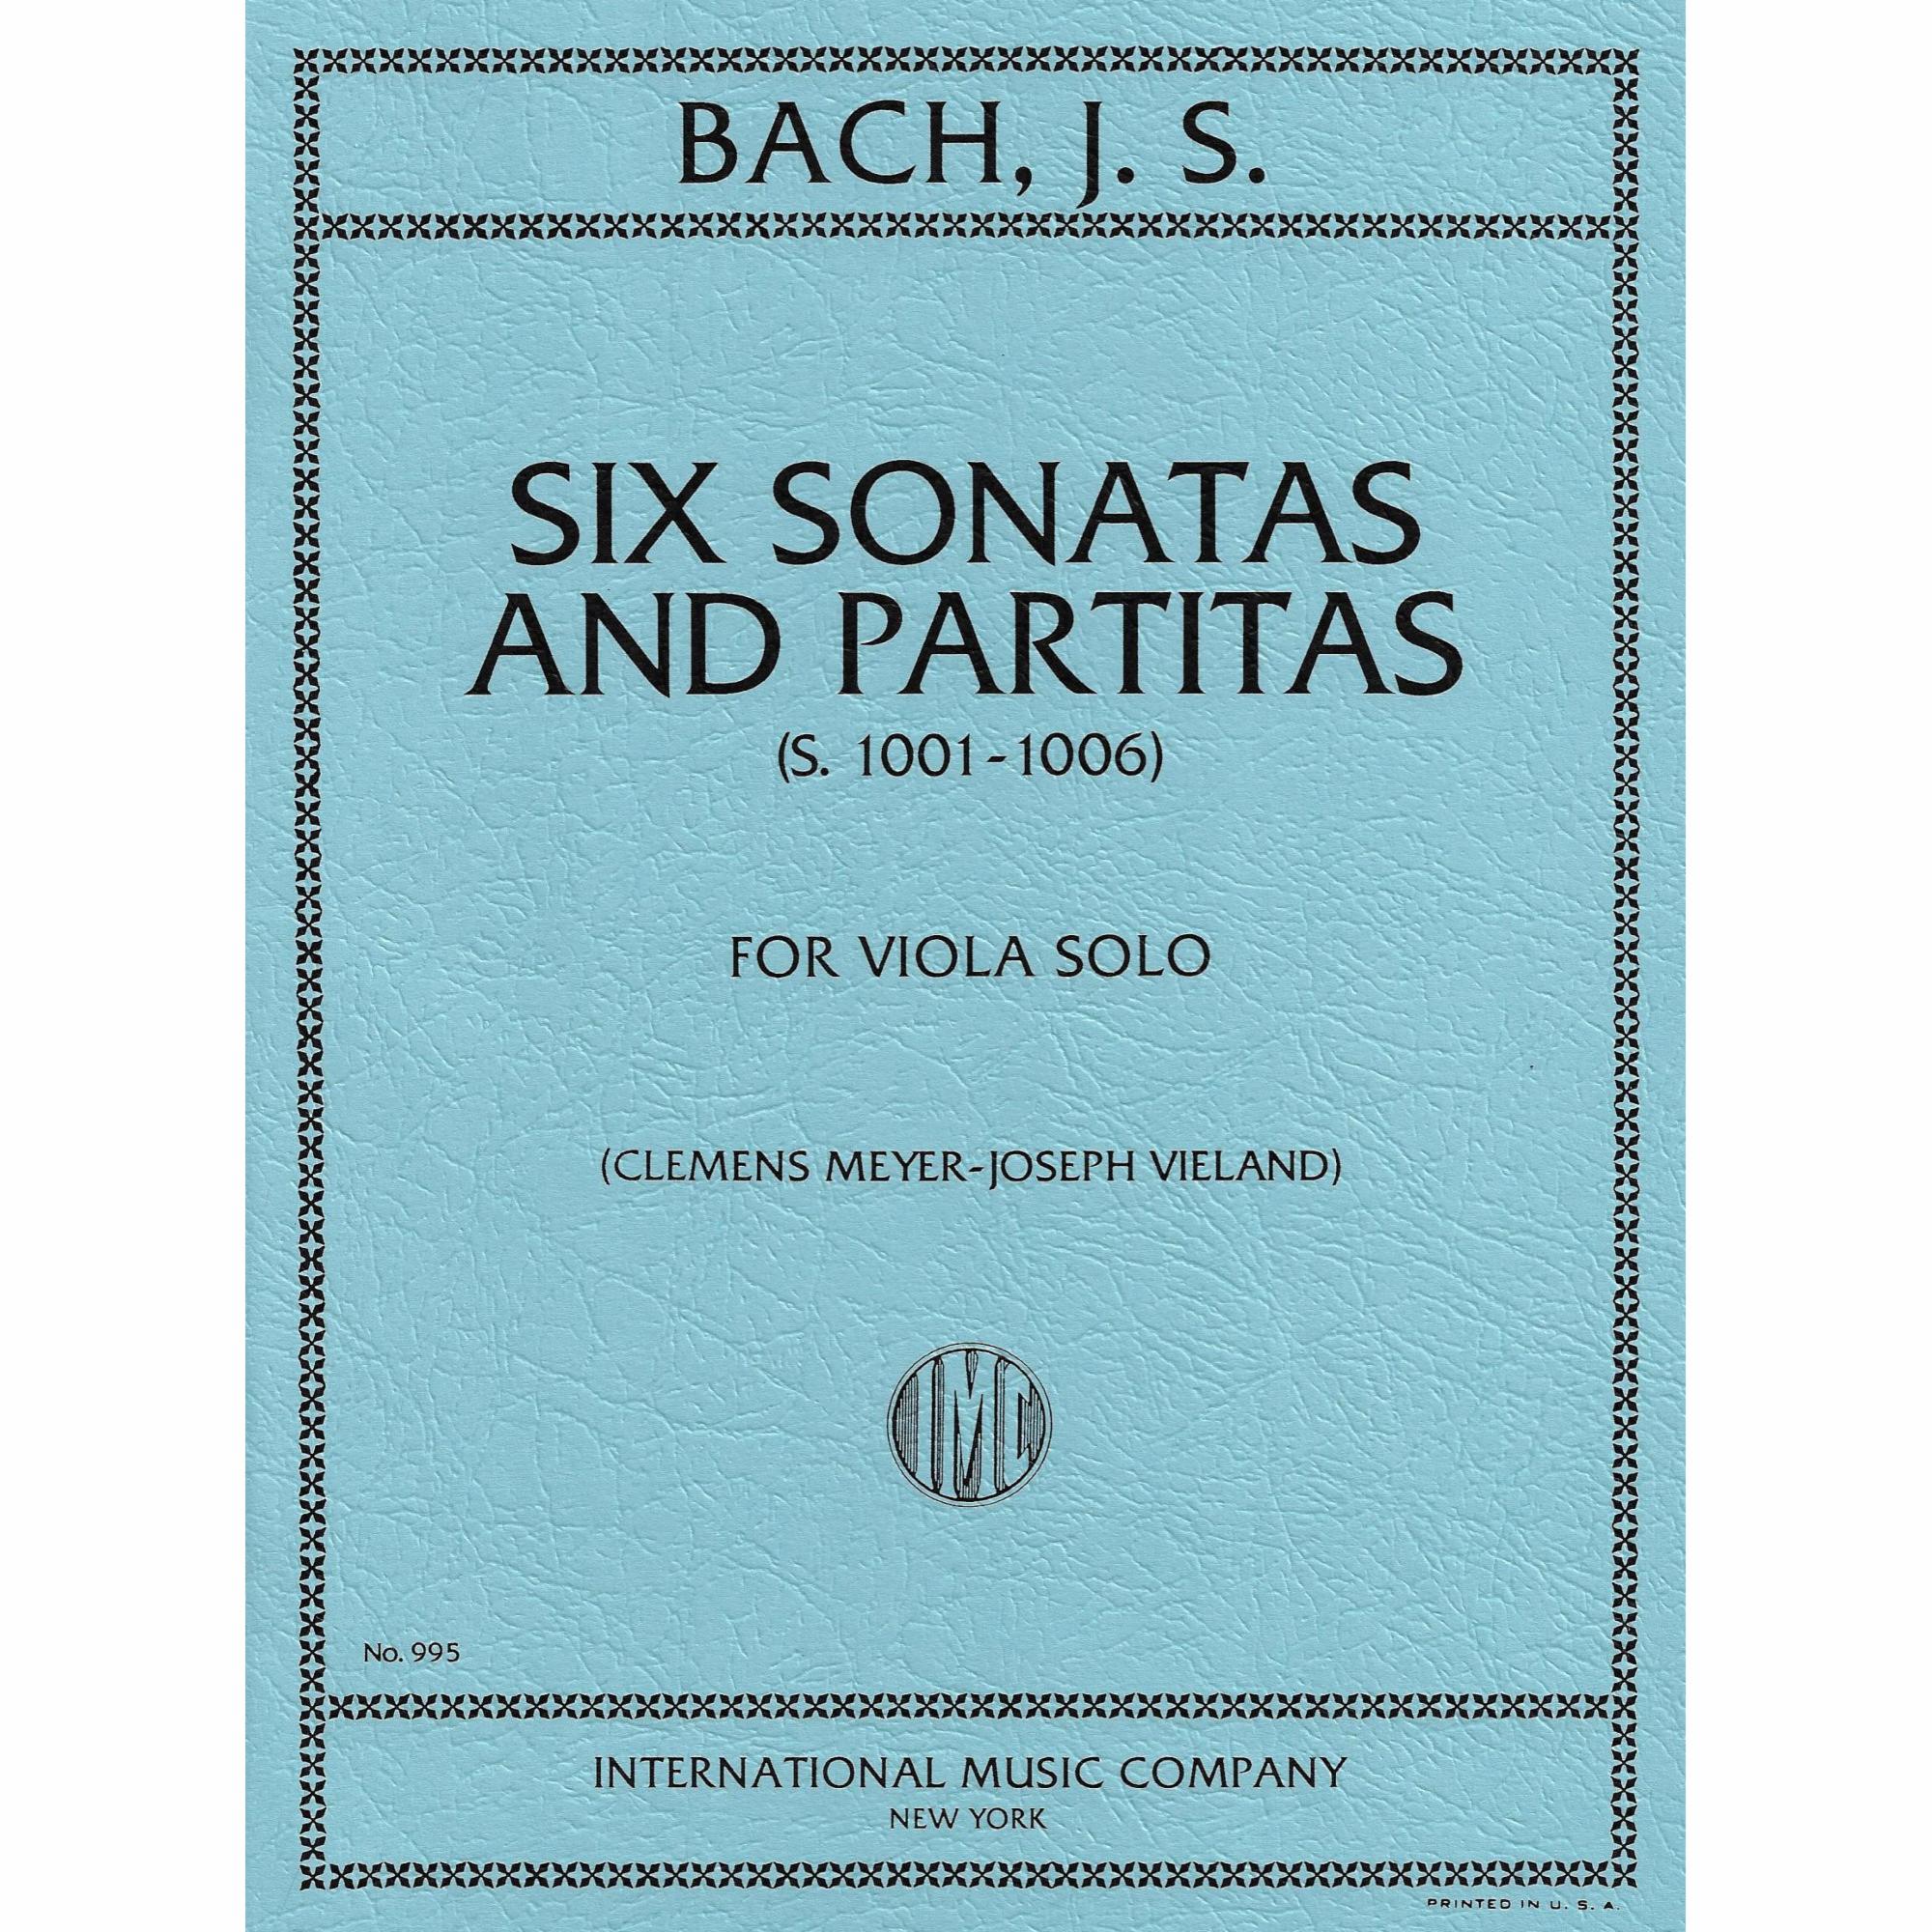 Bach -- Six Sonatas and Partitas, S. 1001-1006 for Solo Viola